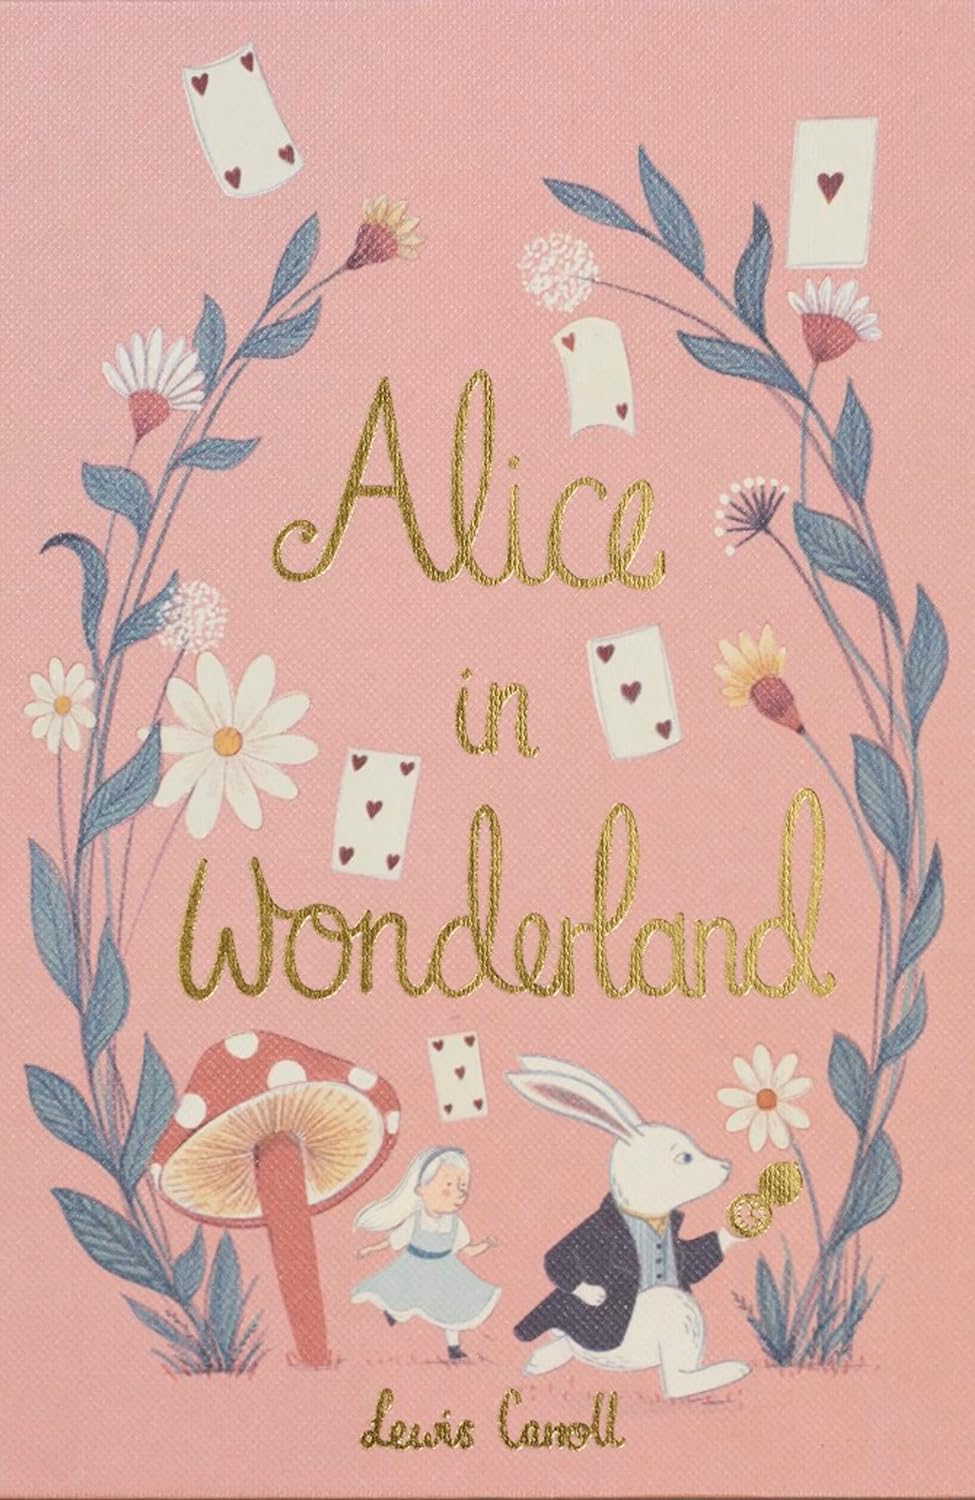 Book - Alice In Wonderland, by Lewis Carroll